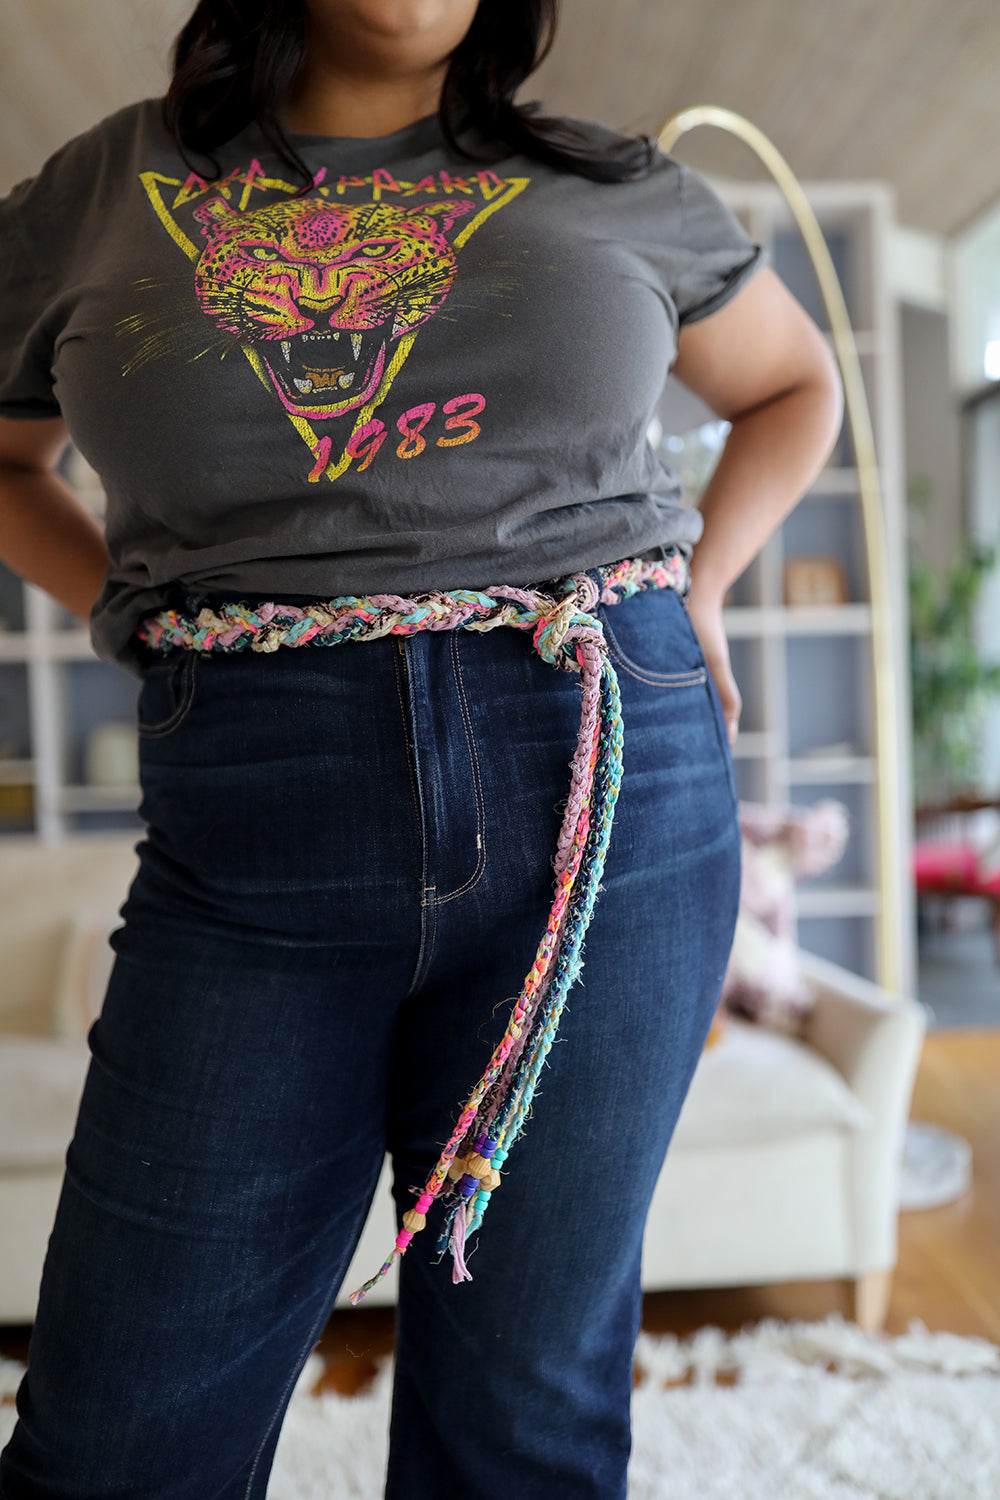 Crochet Braided Cord Tutorial - Crochet Belts, Necklaces